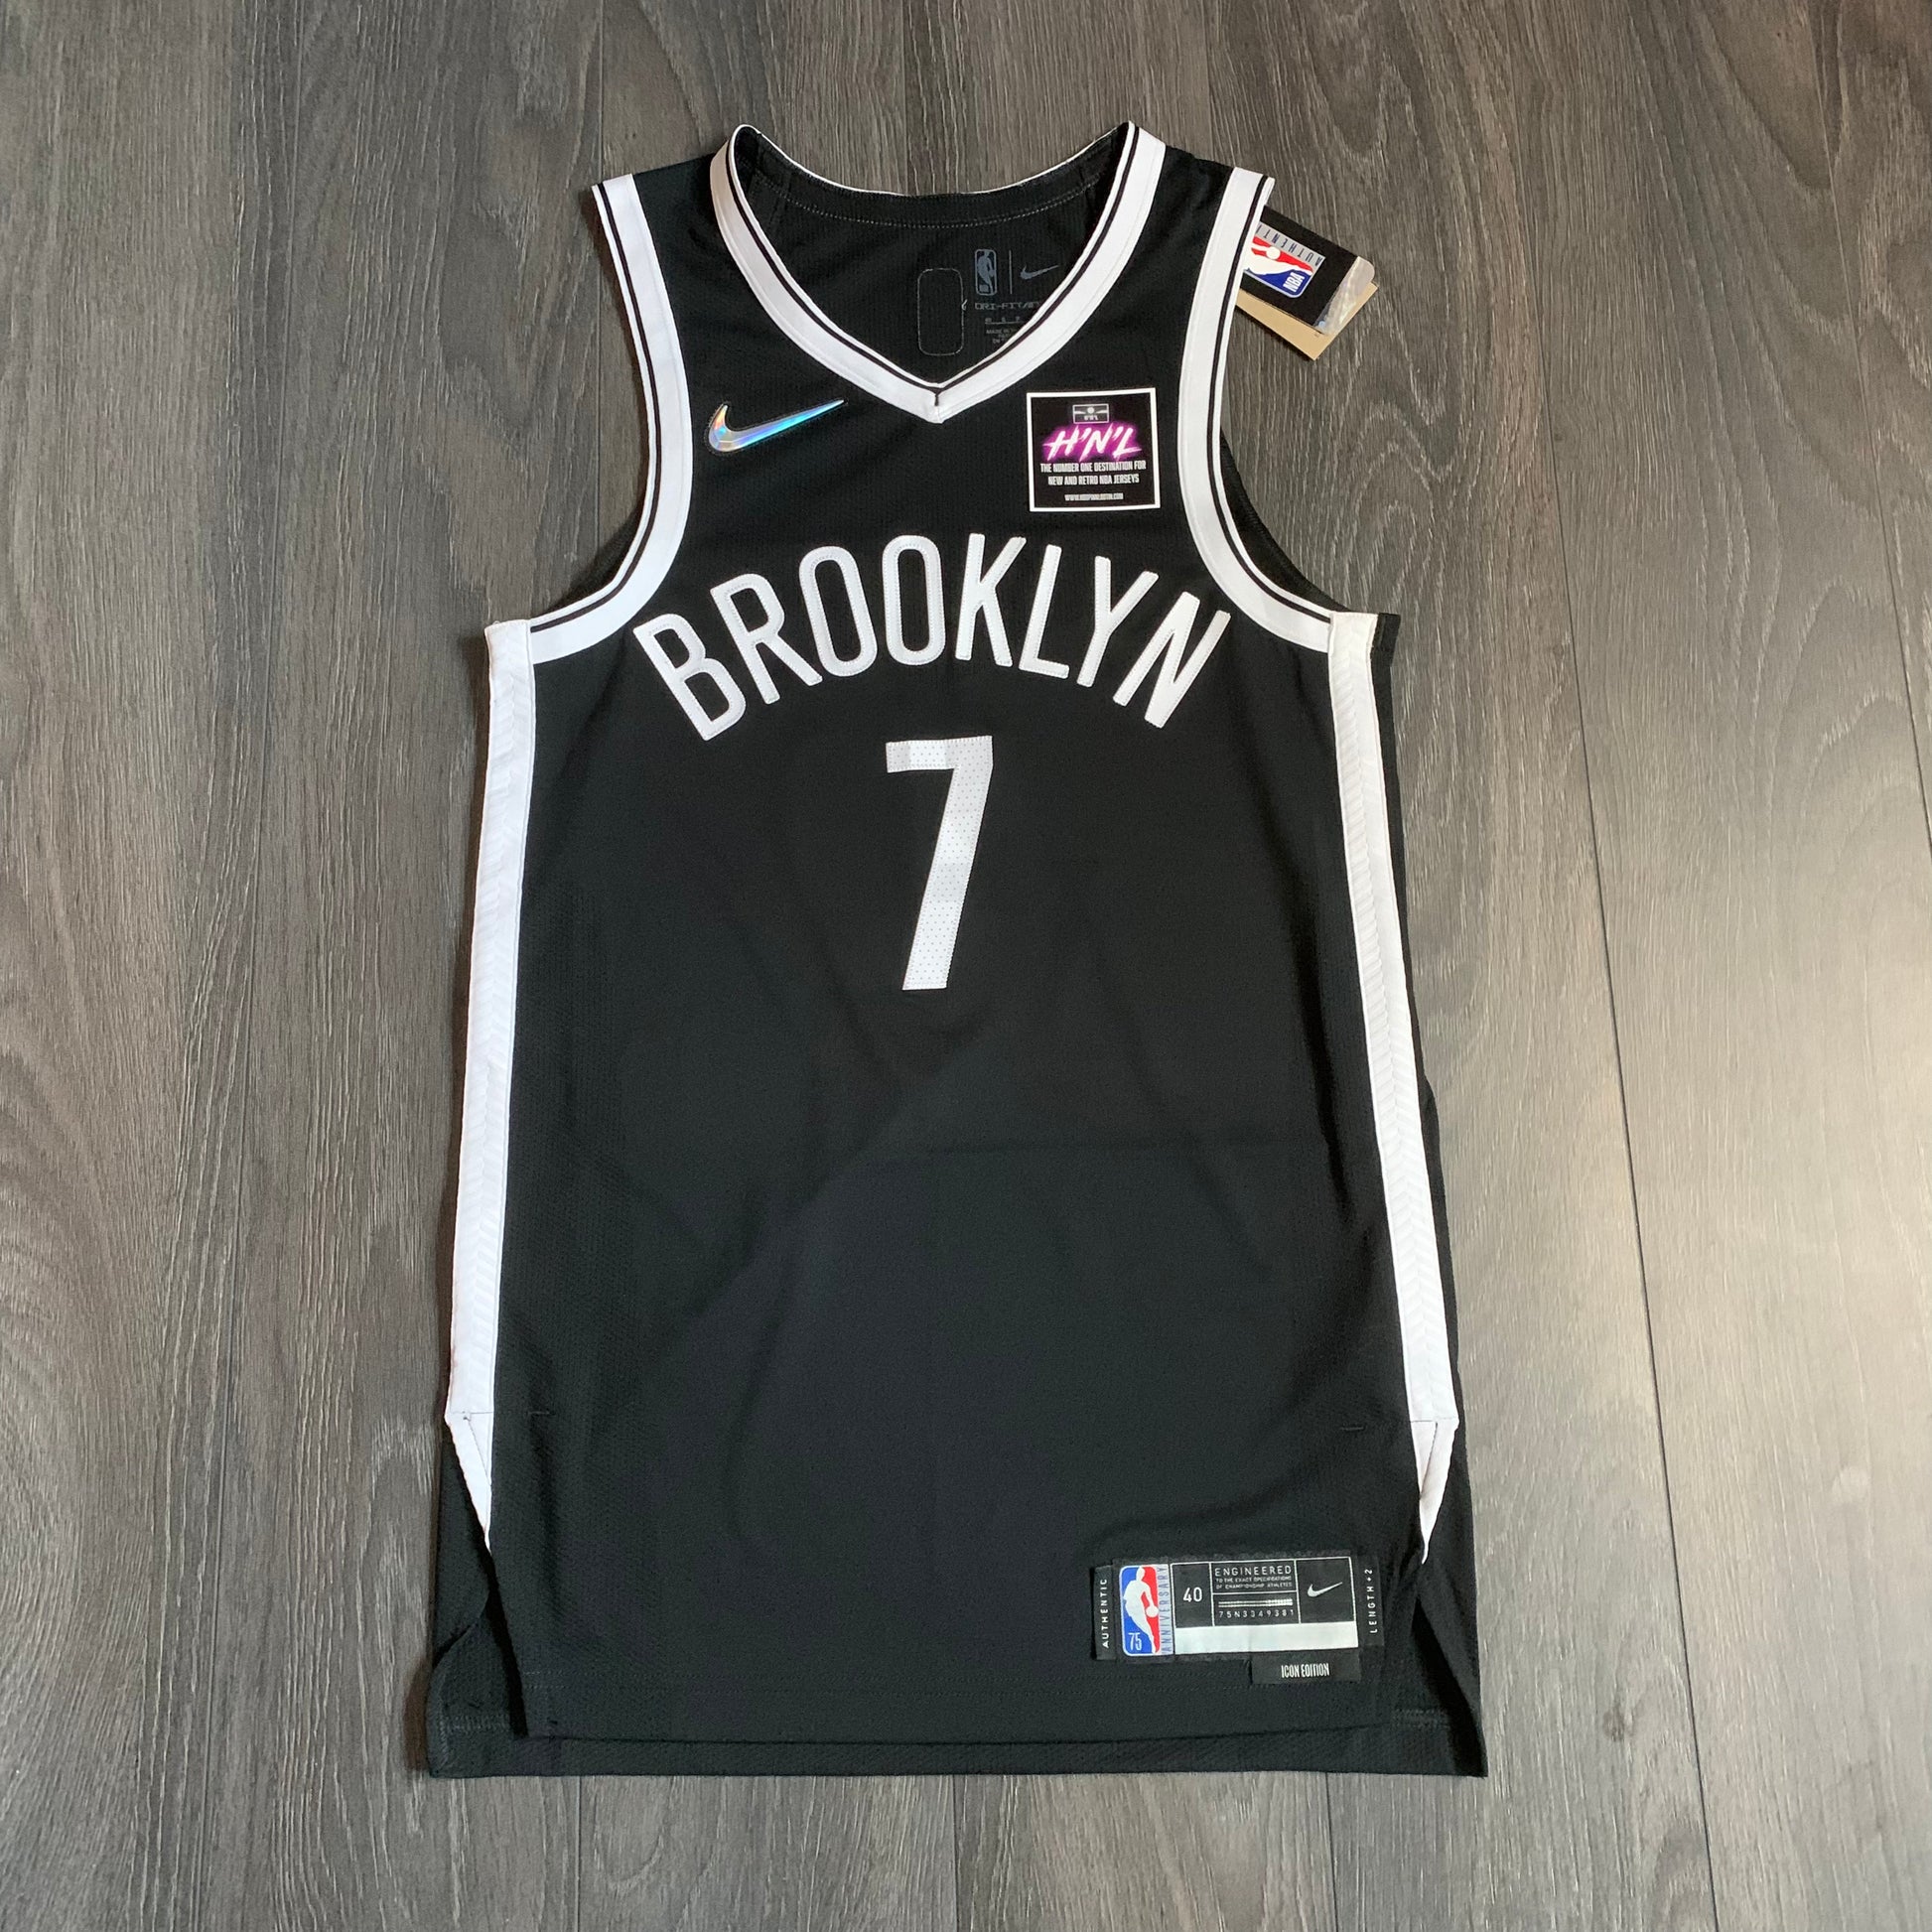 75th Anniversary Durant #7 Brooklyn Nets City Edition Gray NBA